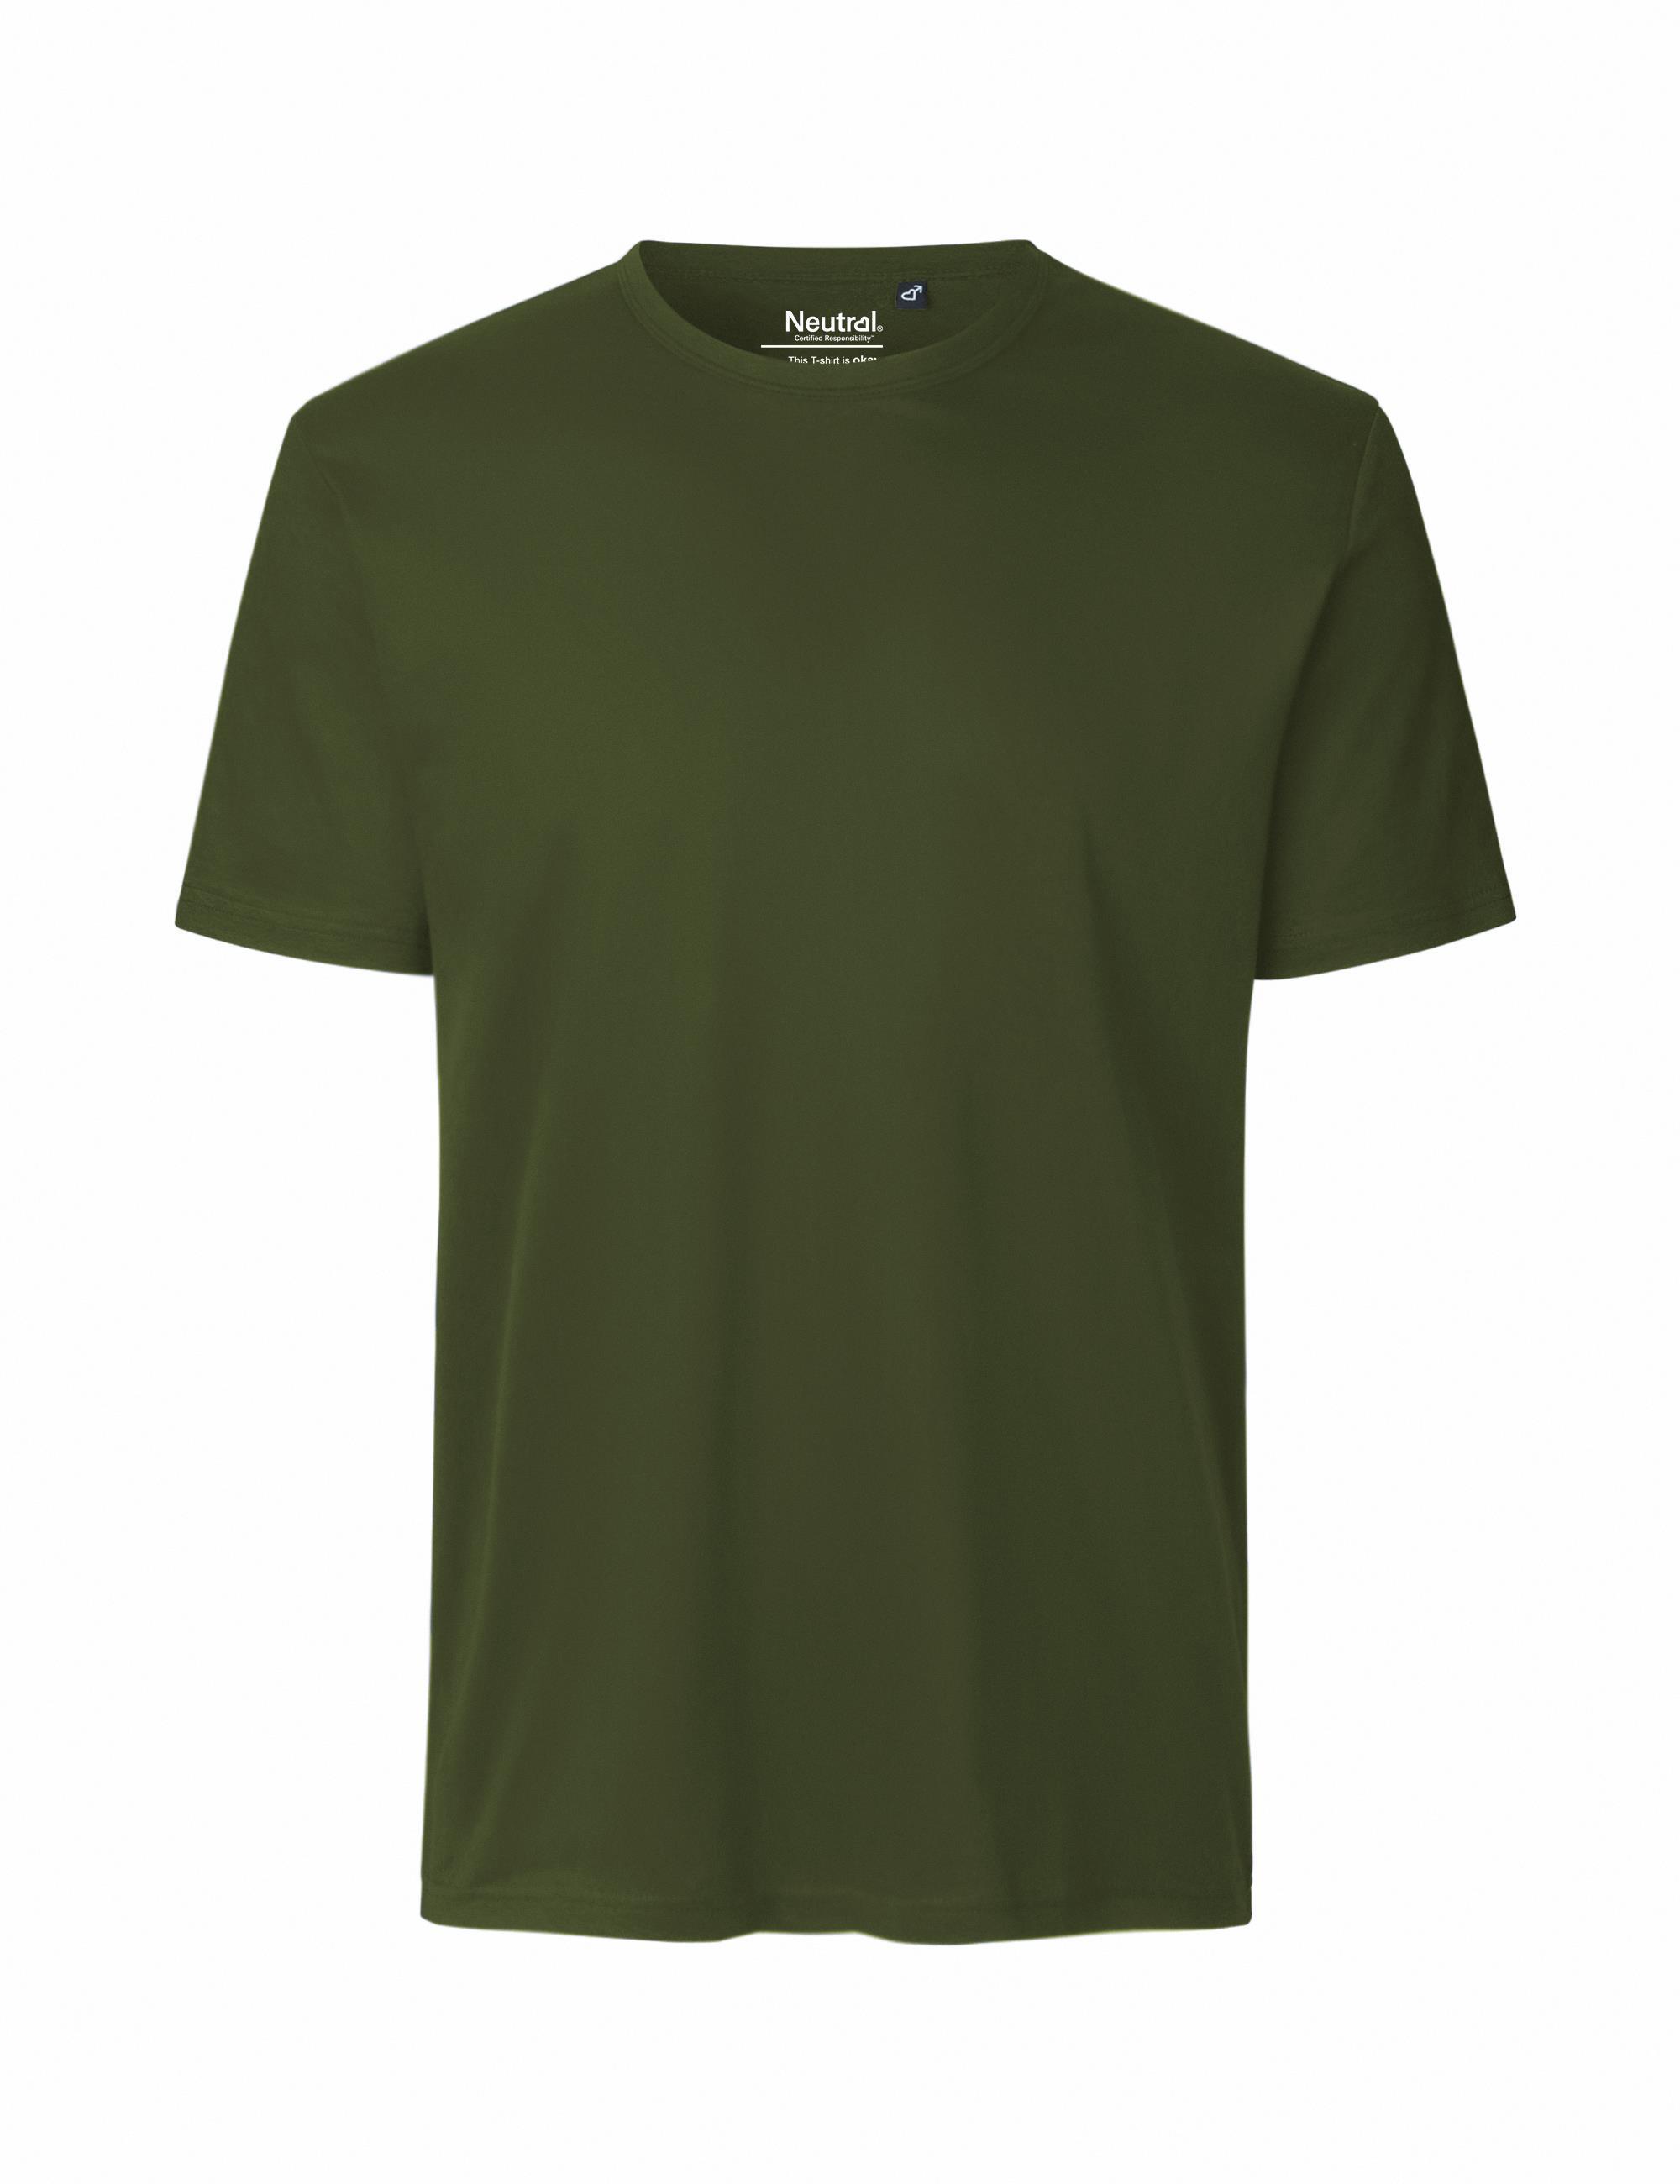 Fairtrade Organic Men's Interlock T-Shirt 220 g/m² Neutral® Military L